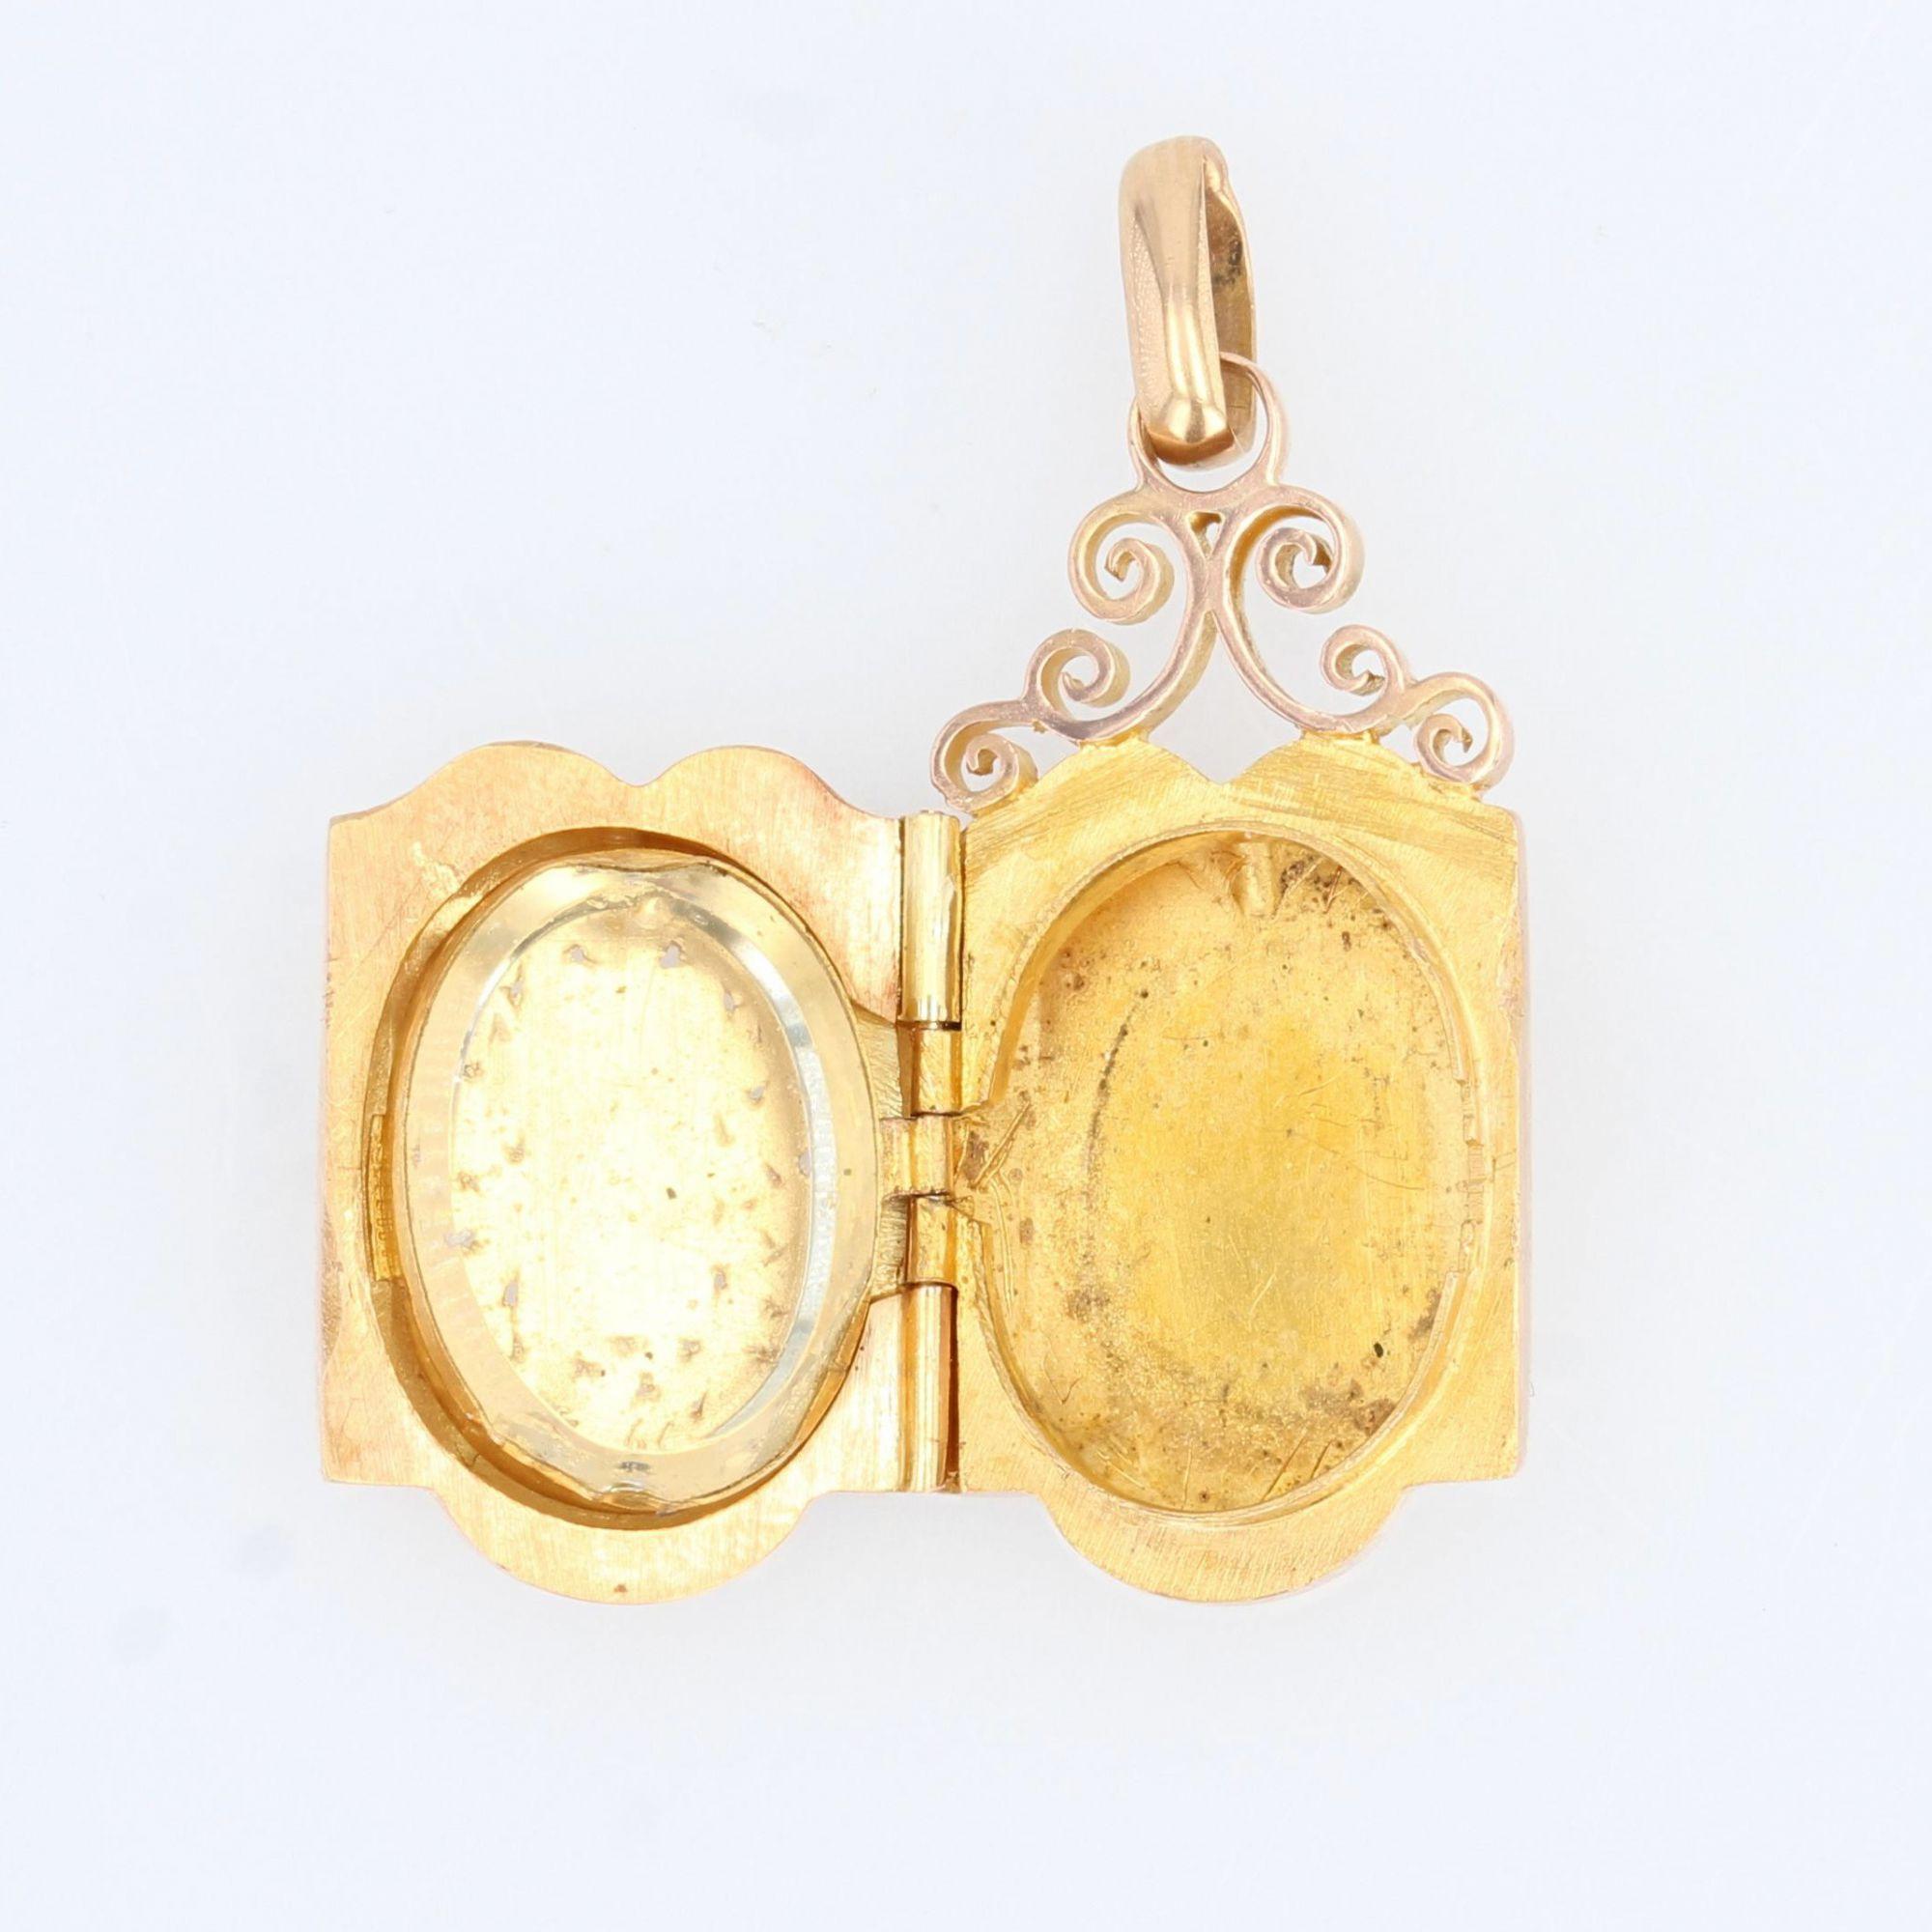 French 19th Century 18 Karat Rose Gold Chiseled Little Medallion For Sale 2